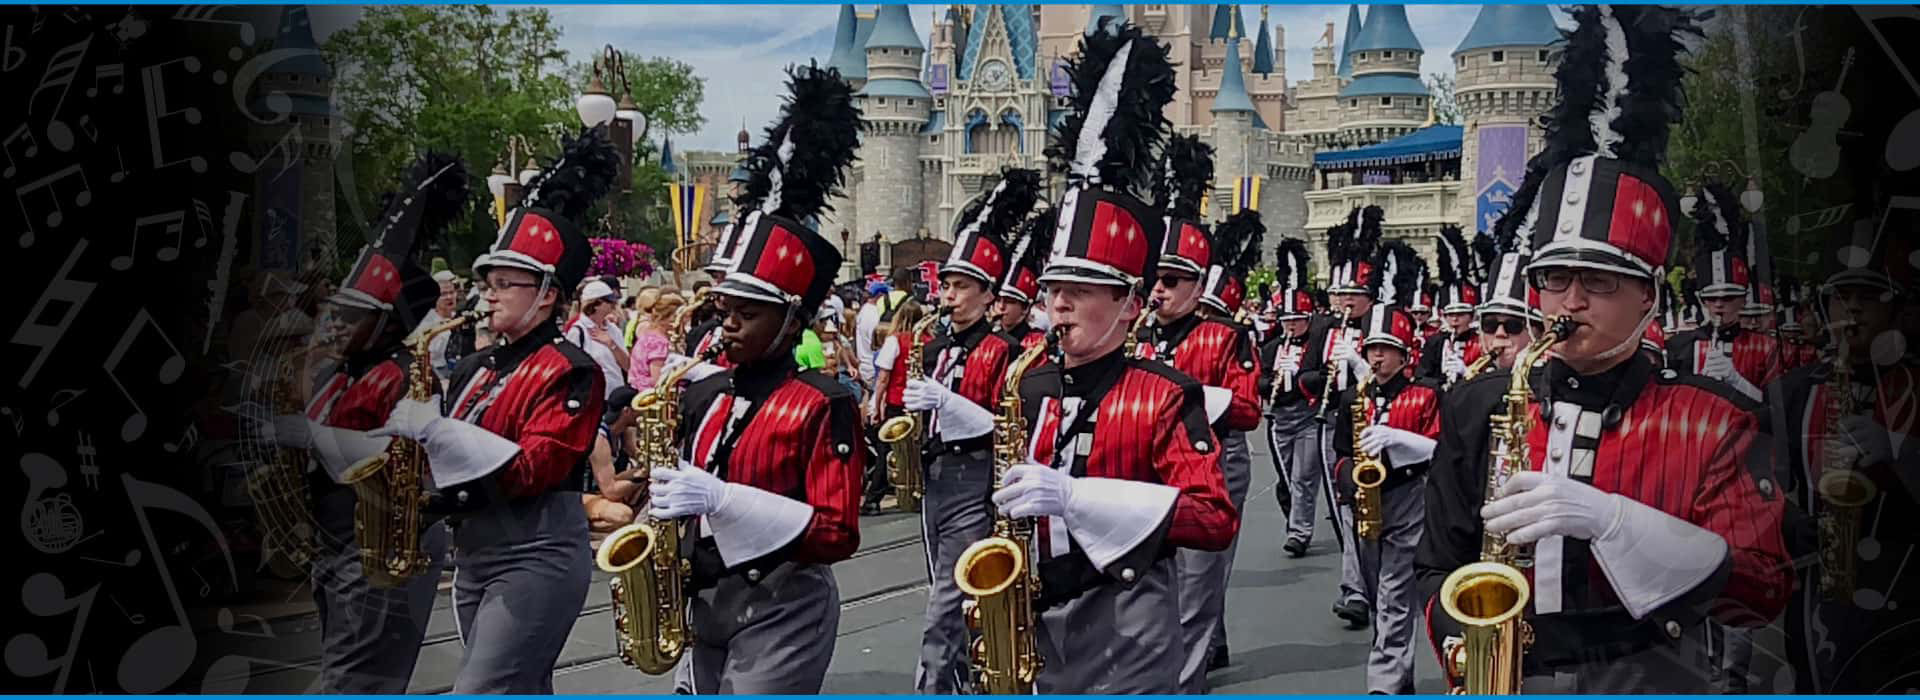 Disney Marching Band Travel